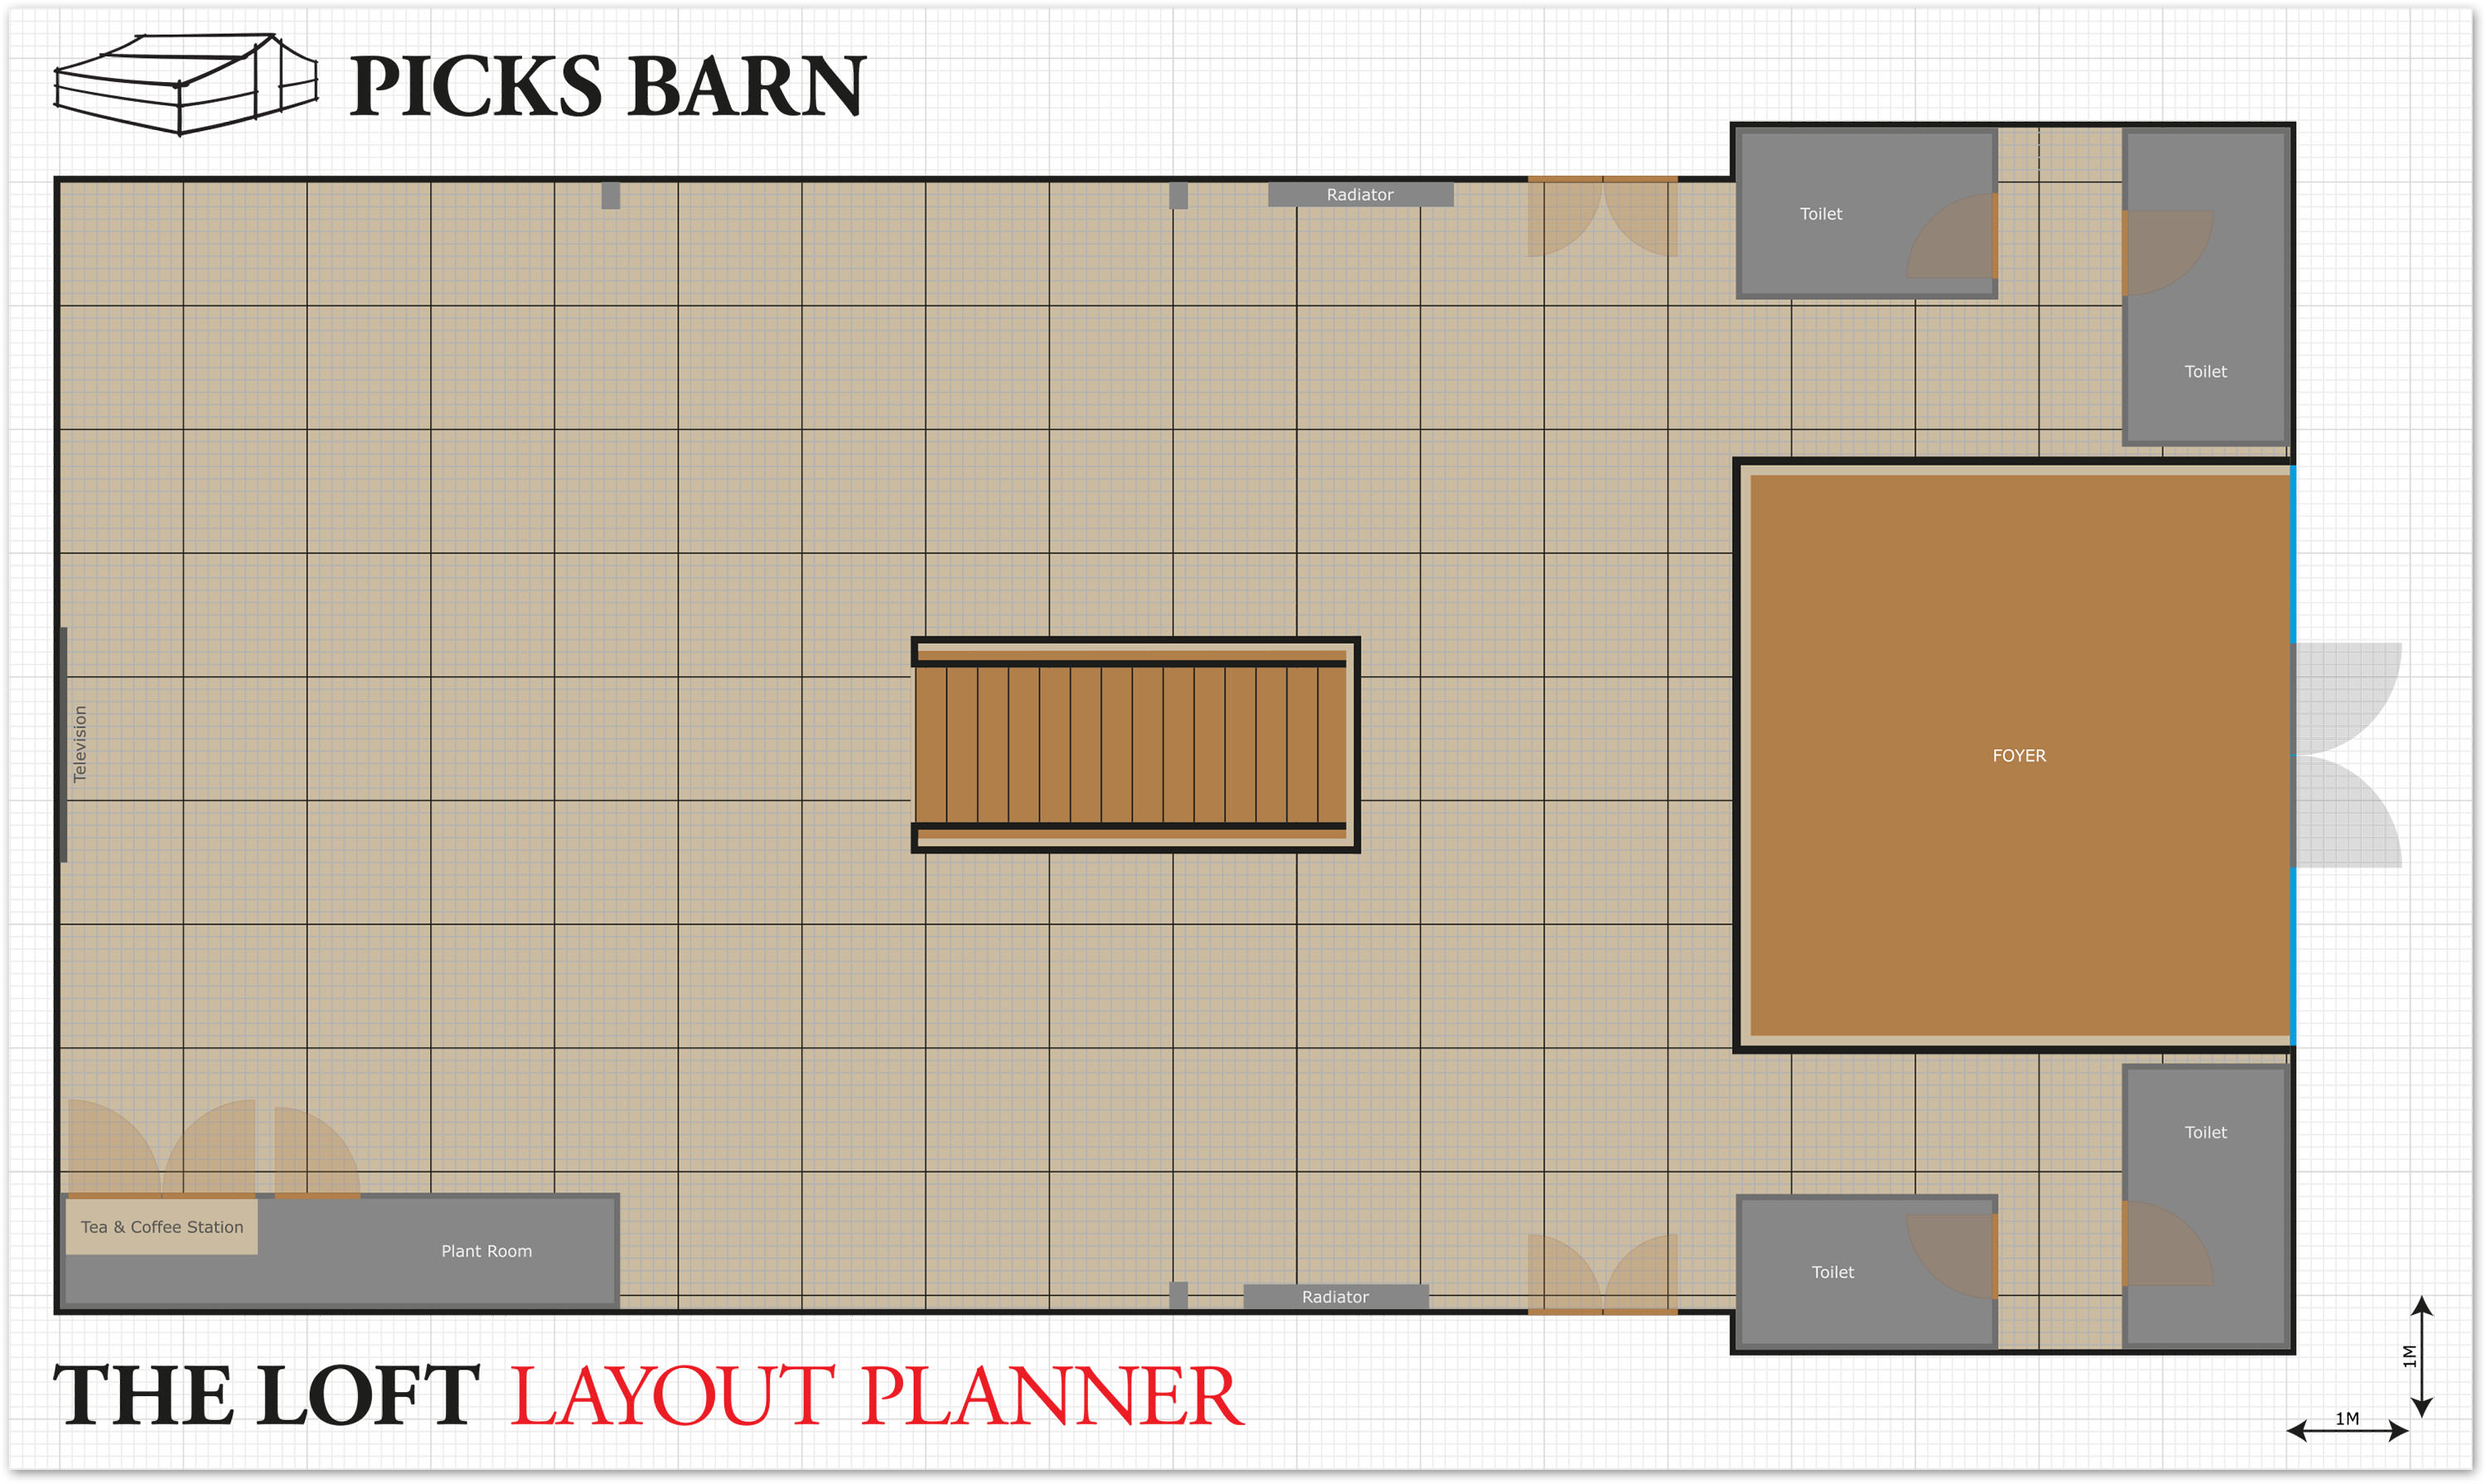 Picks Barn Loft Layout Planner Image